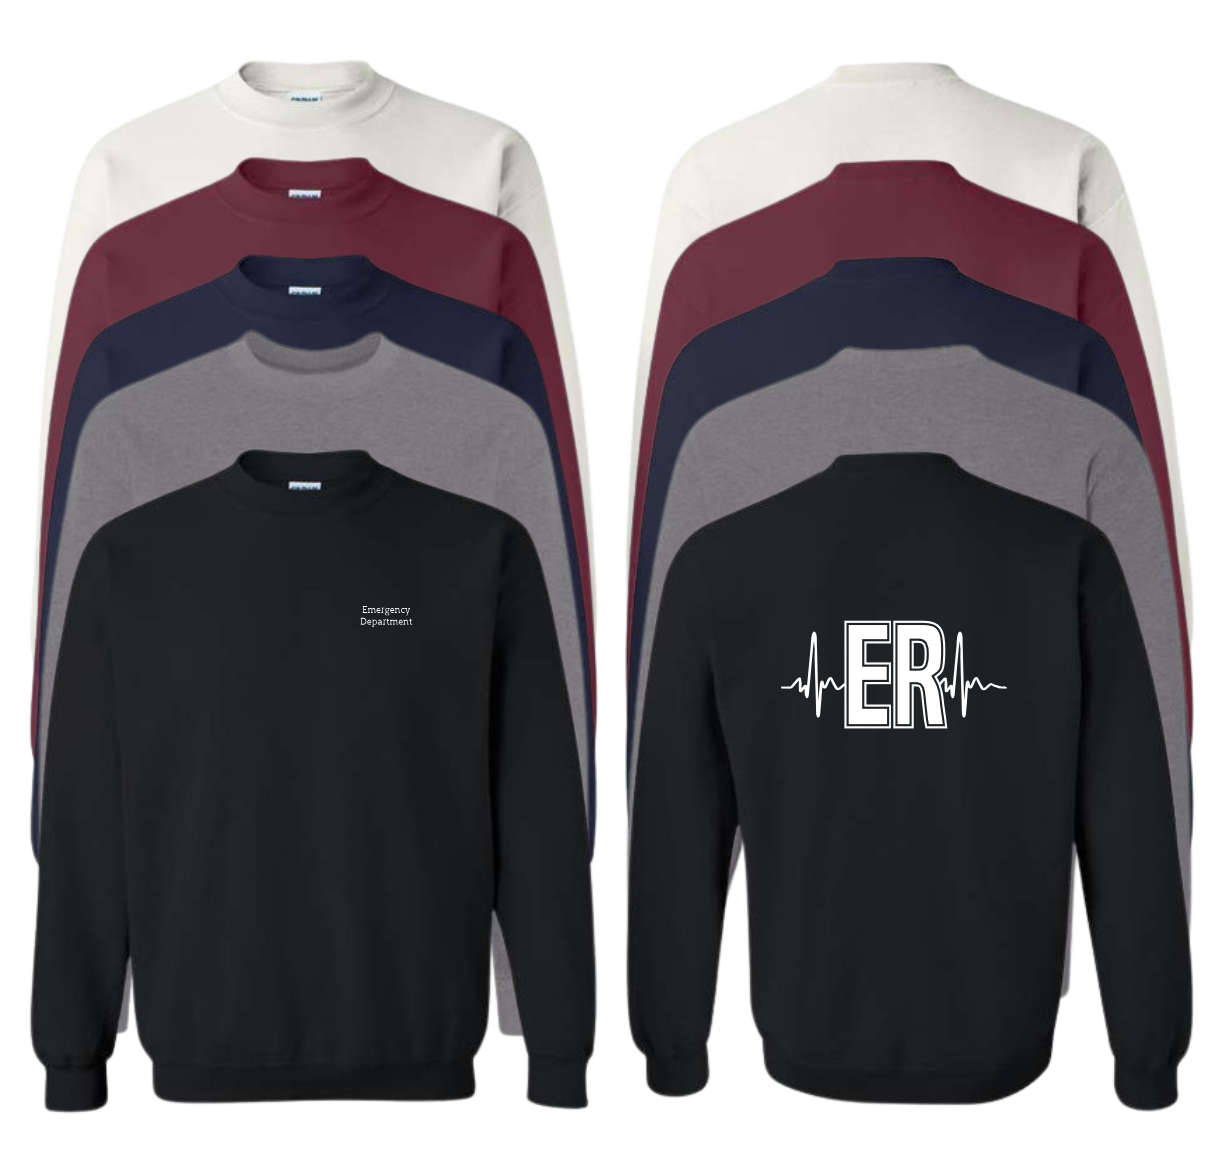 Emergency Department Rhythm Cotton Crewneck Sweatshirt (+ options)